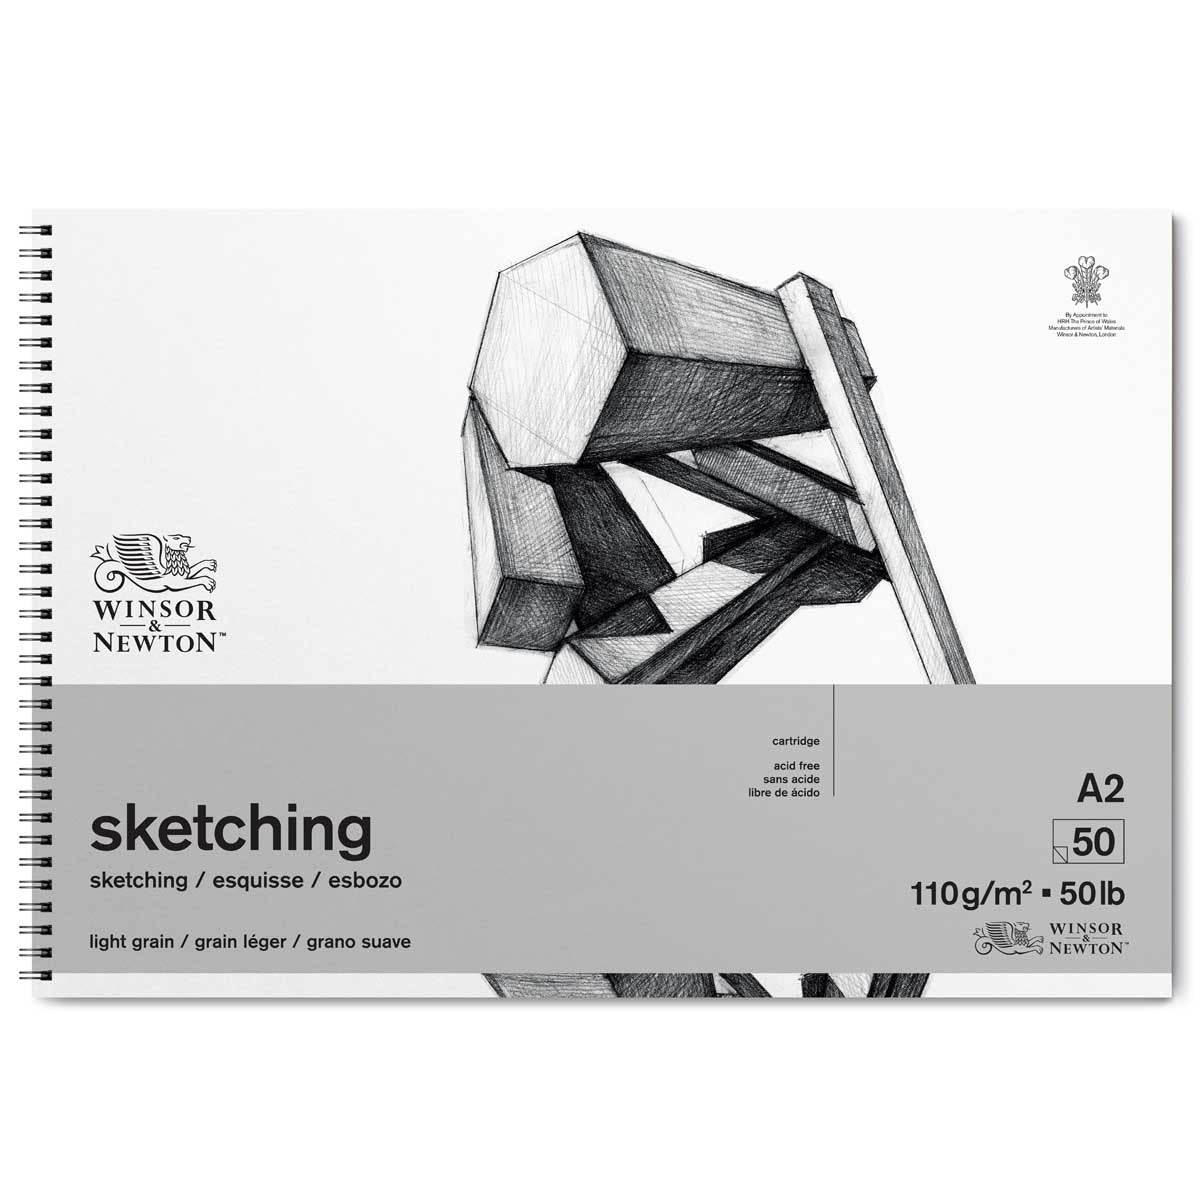 Winsor and Newton - Cartridge 110g Sketch Pad 50 Sheet - A2